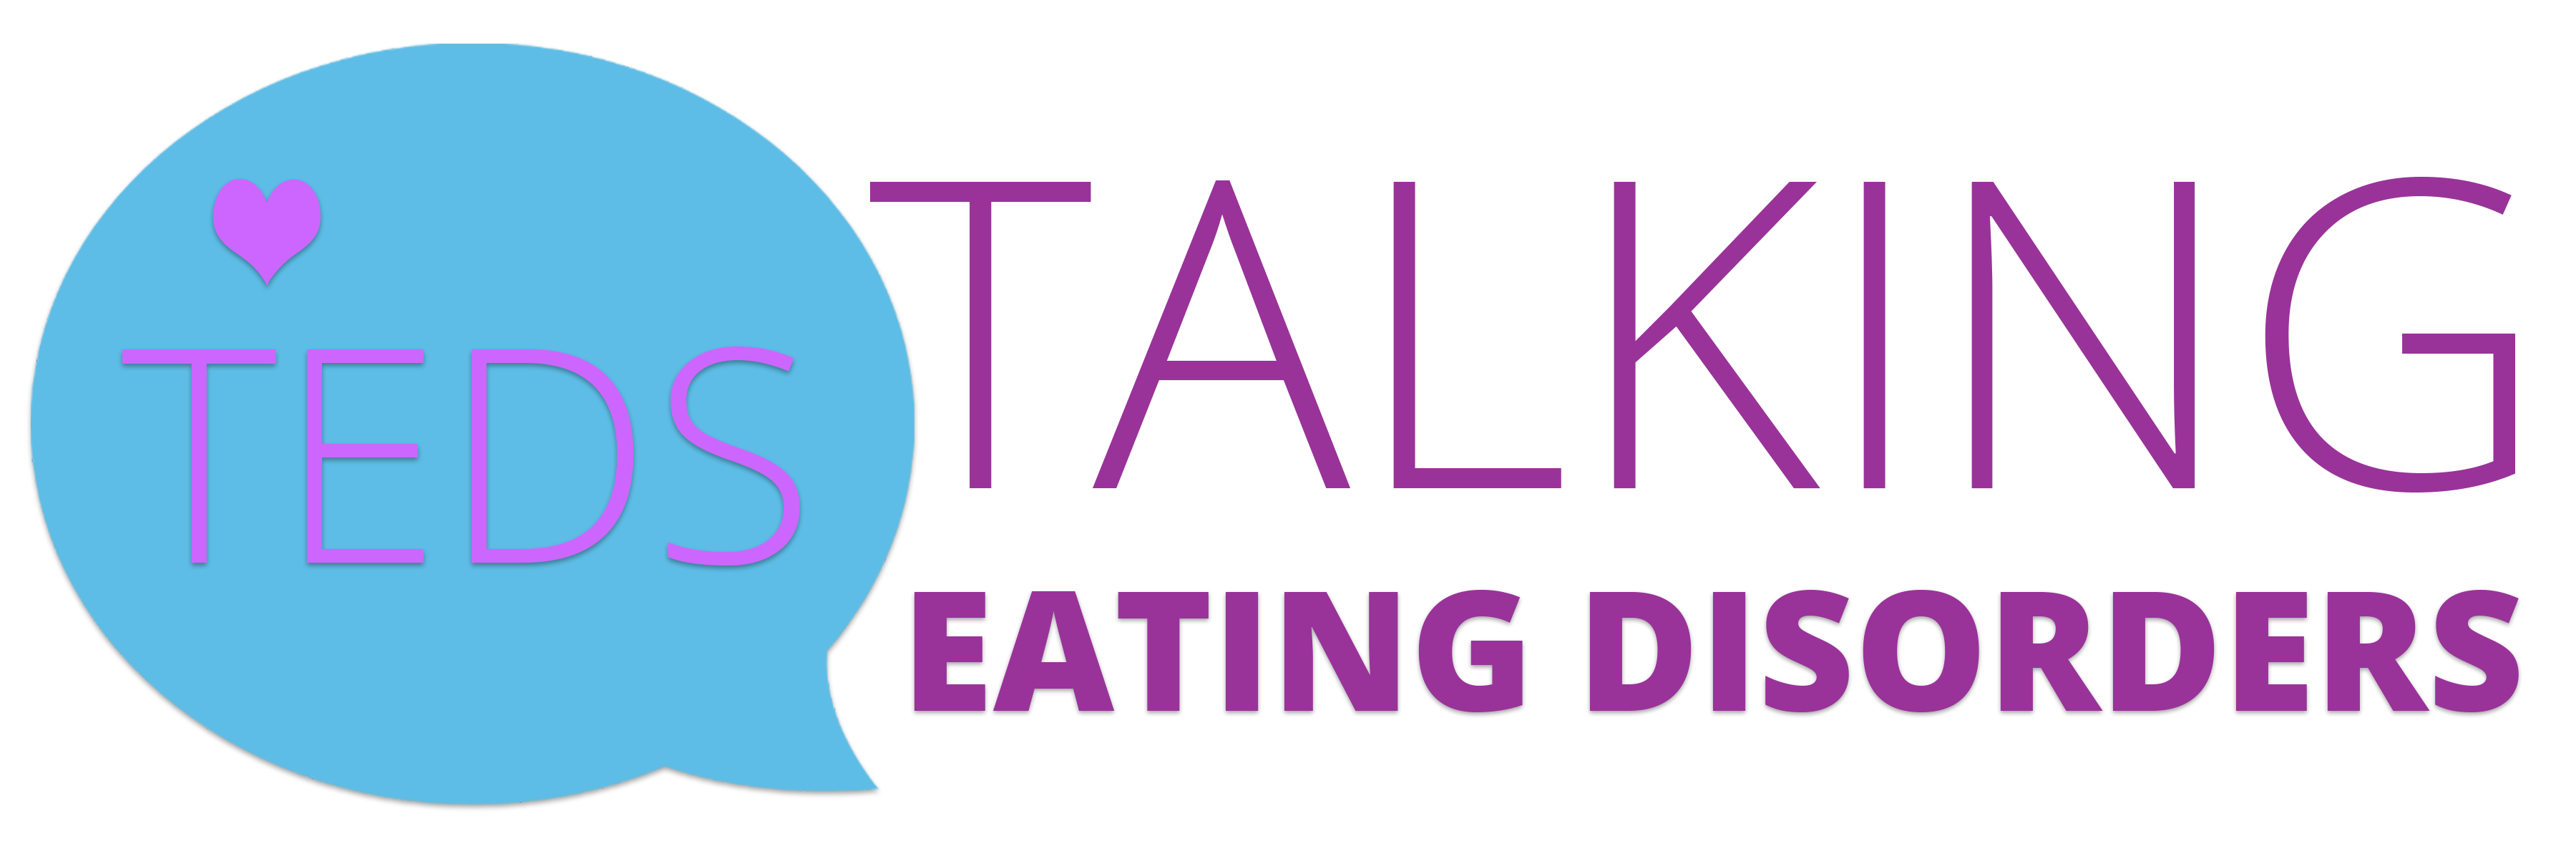 Talking Eating Disorders